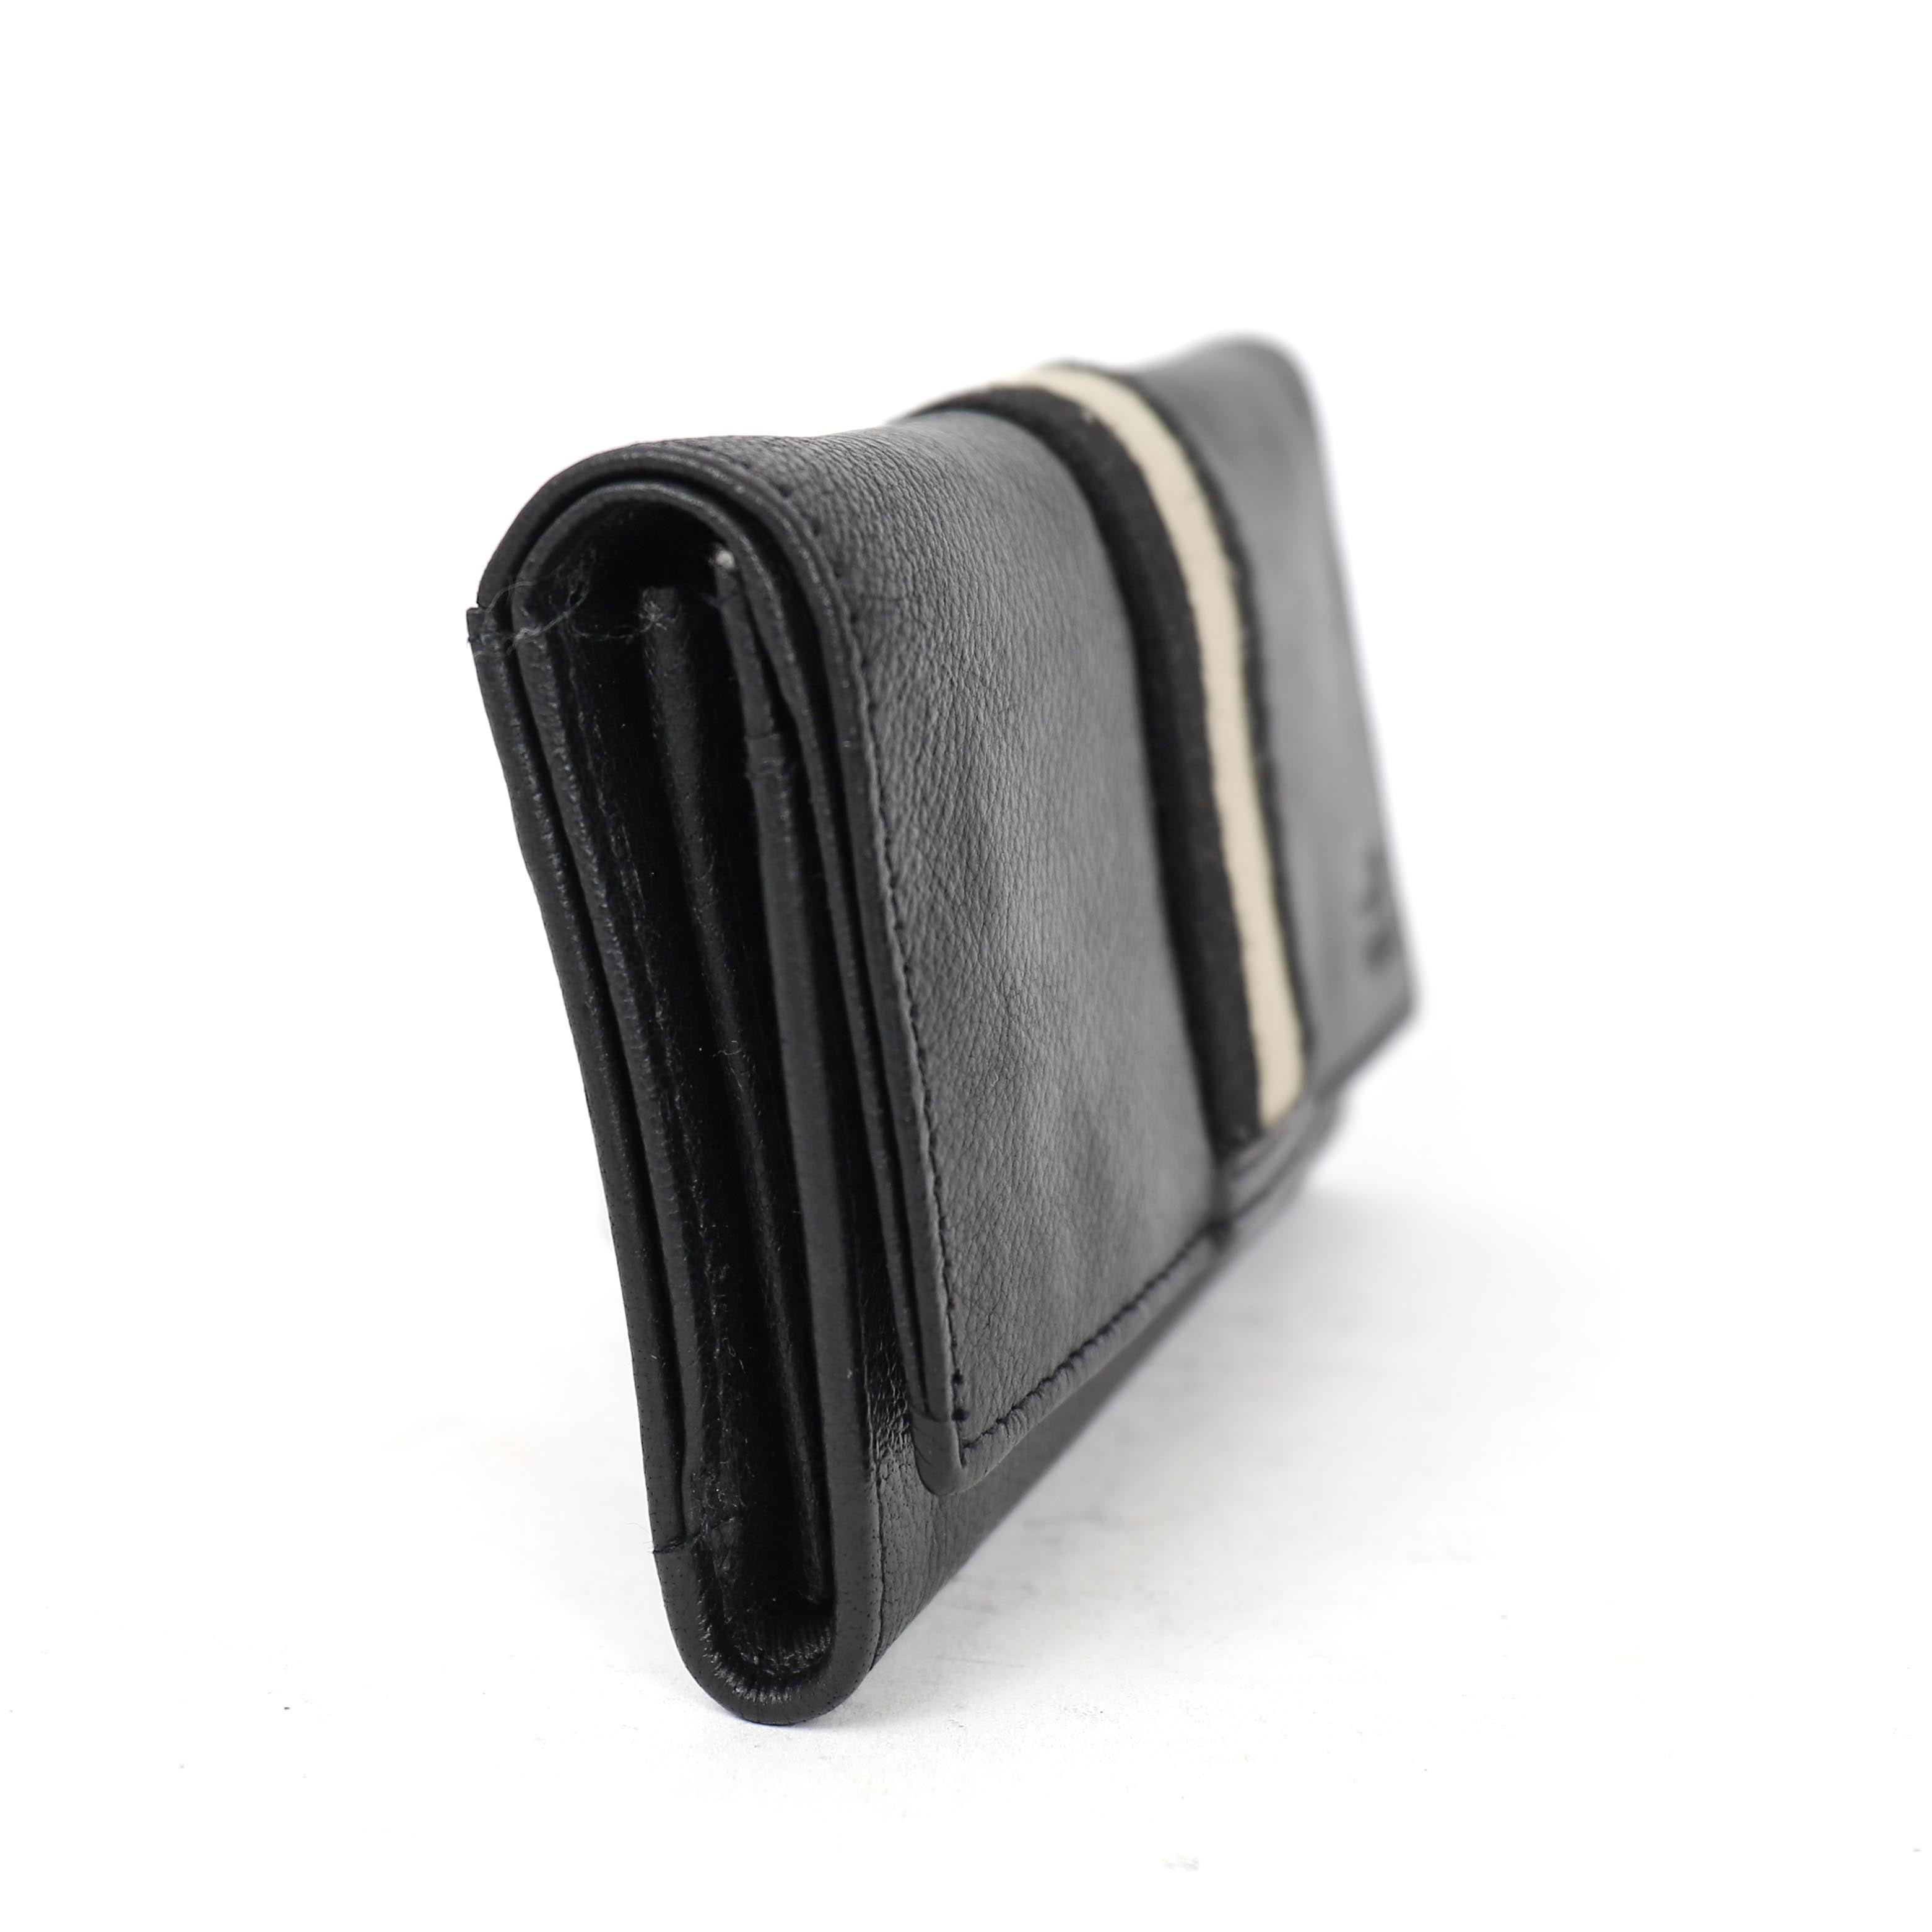 Wrap wallet 'Sweety' XL black/stripe